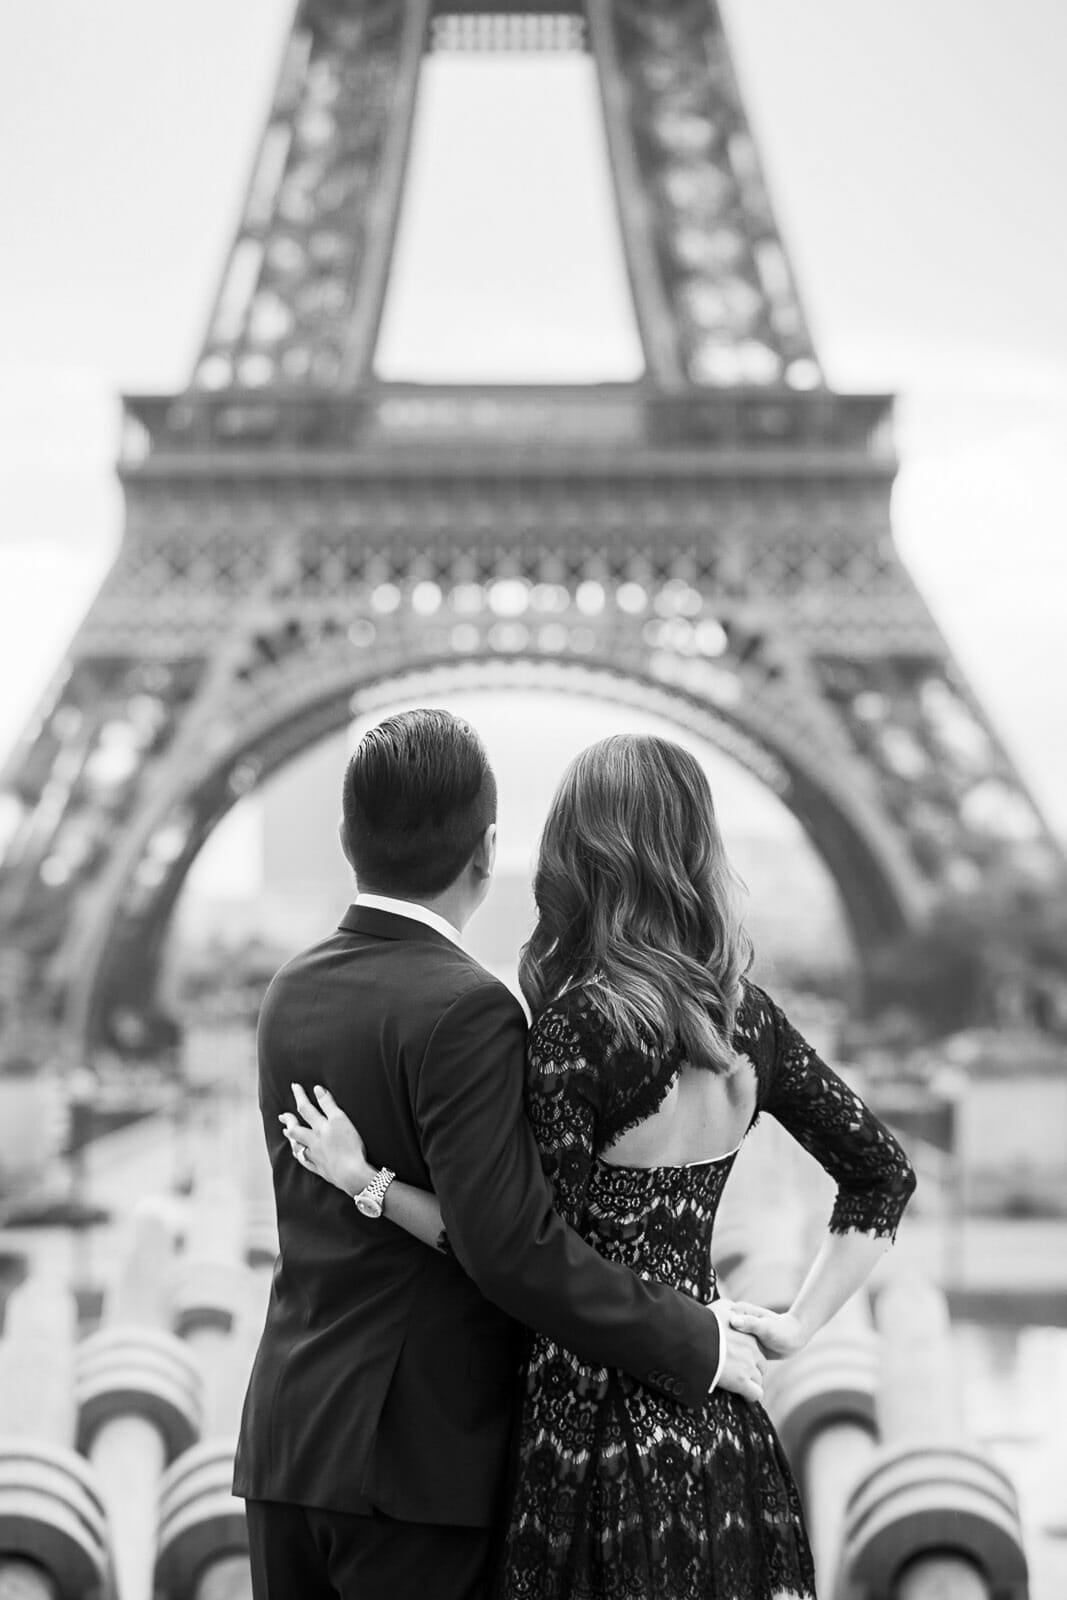 Romantic Eiffel Tower couple photos at Trocadero around sunrise